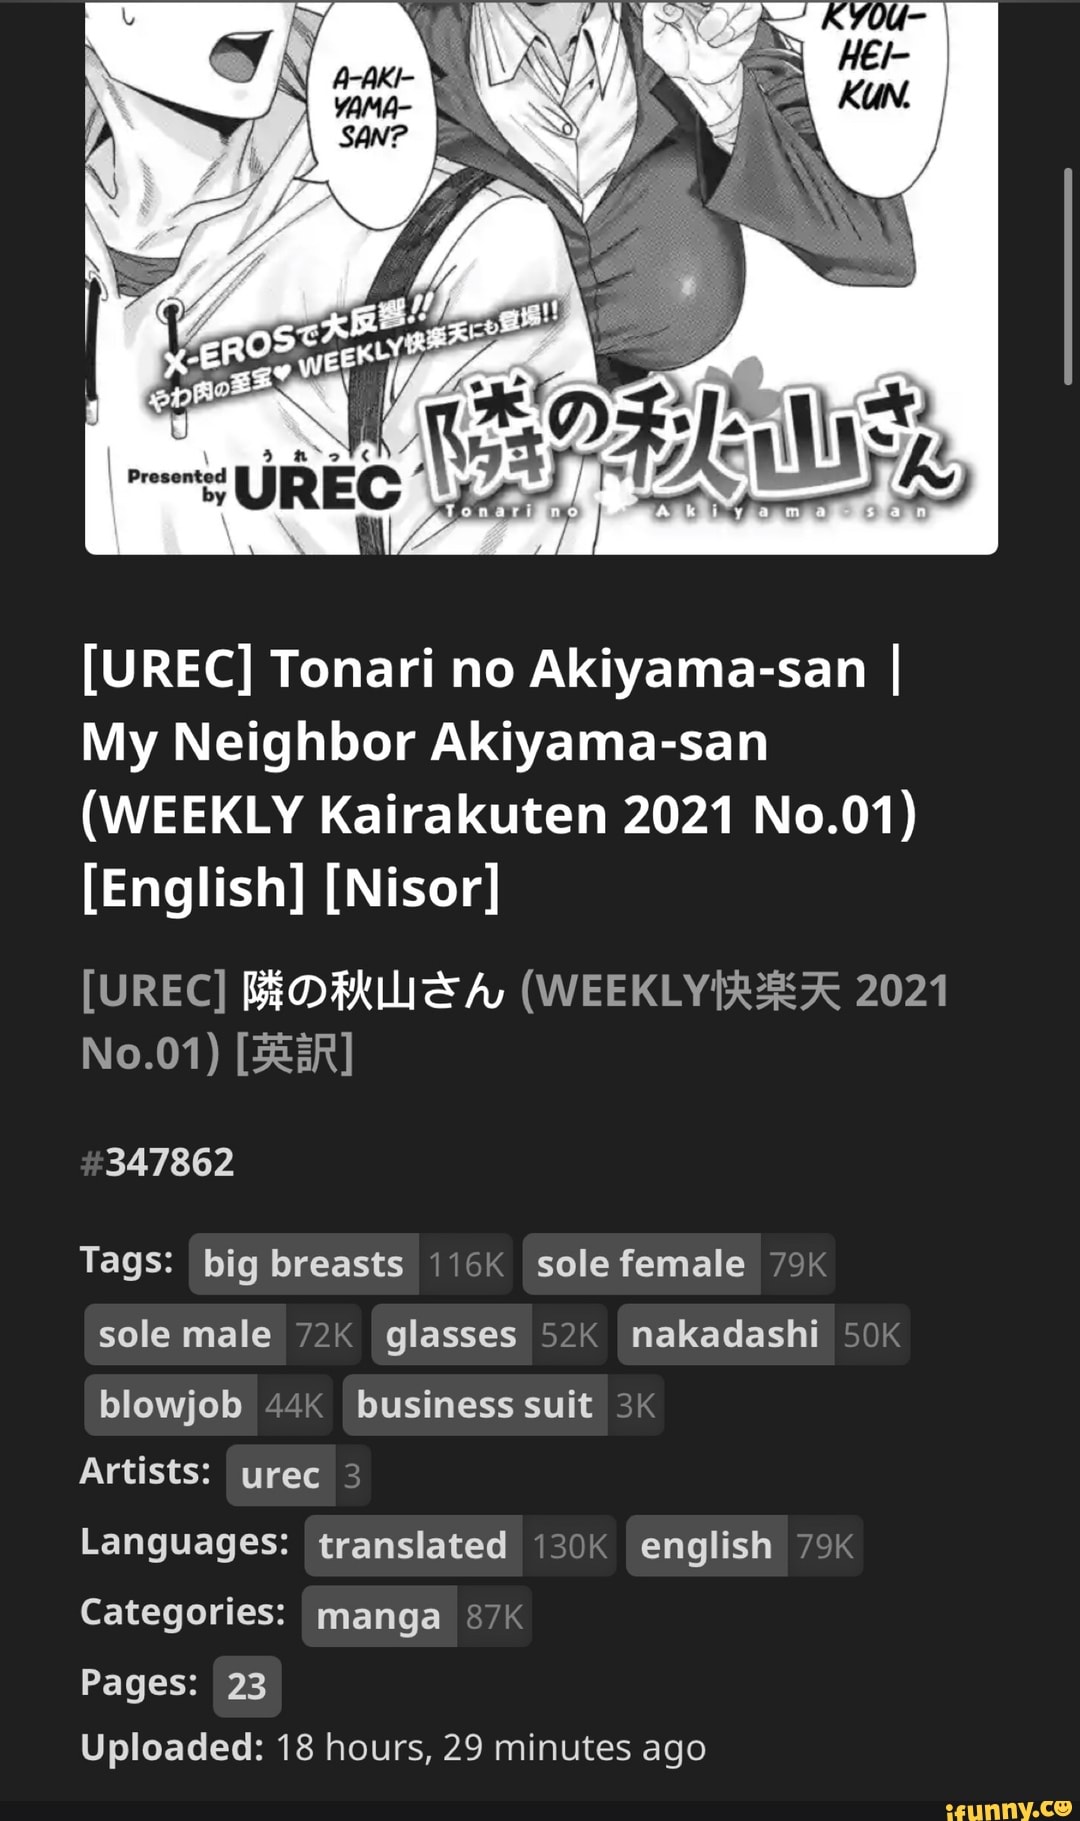 Presented UREC ad [UREC] Tonari no Akiyama-san I My Neighbor 